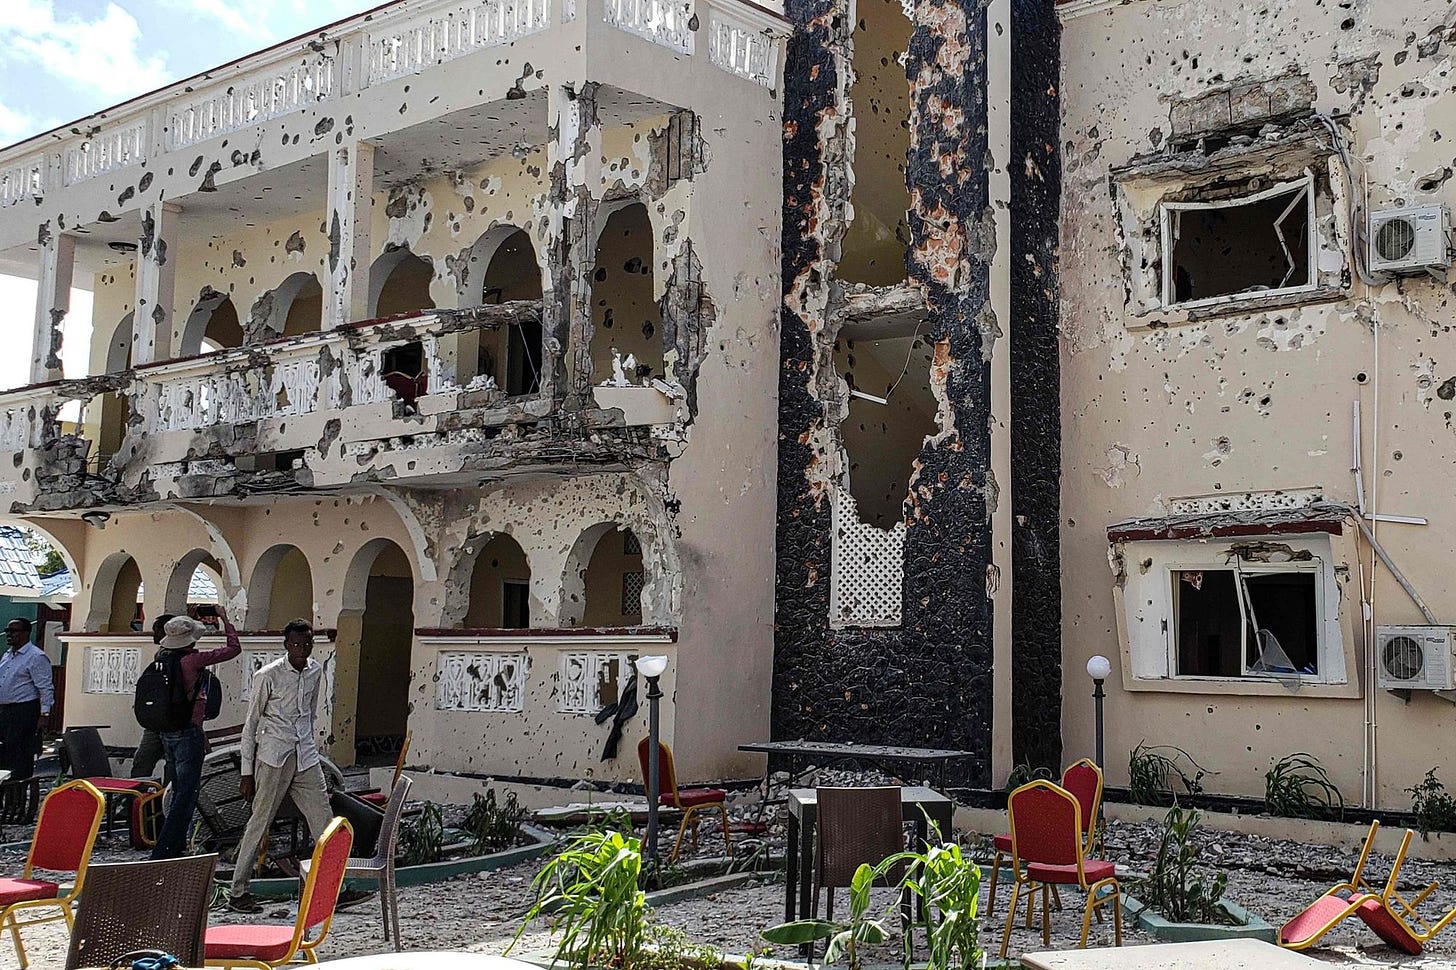 Somalia: Al-Shabaab hotel attack demonstrates continued resilience